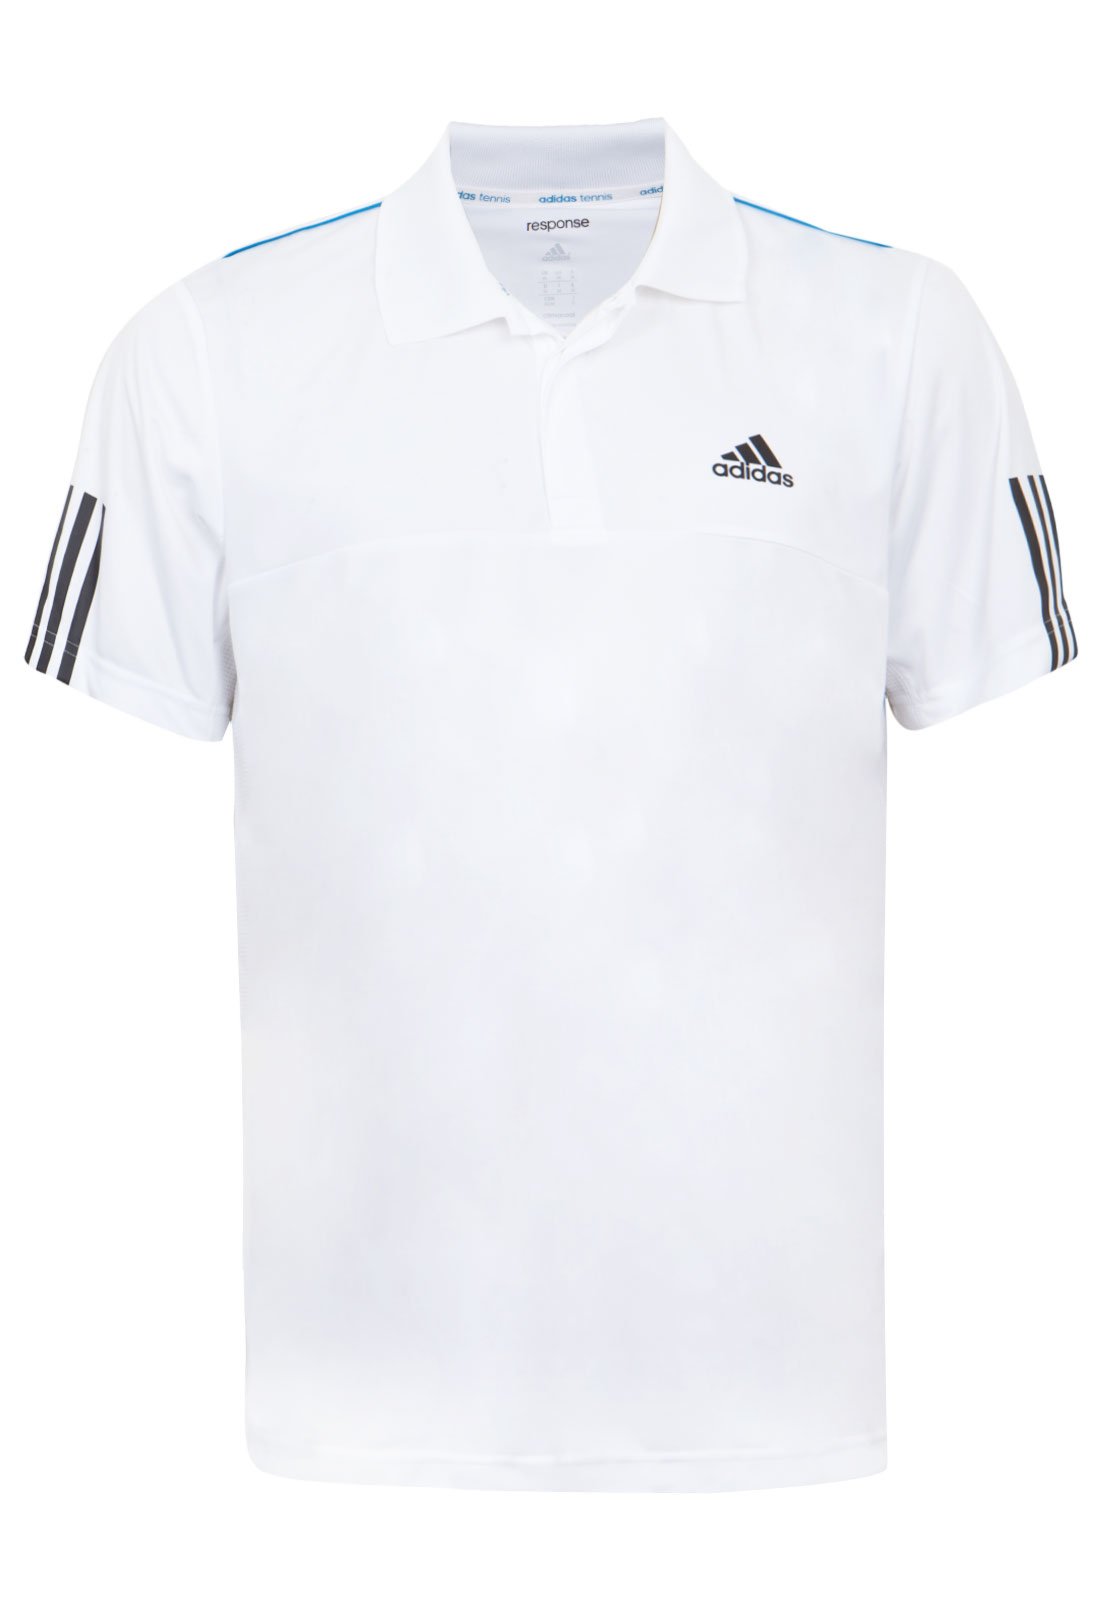 Camisa adidas Performance Beşiktaş I Branca - Compre Agora